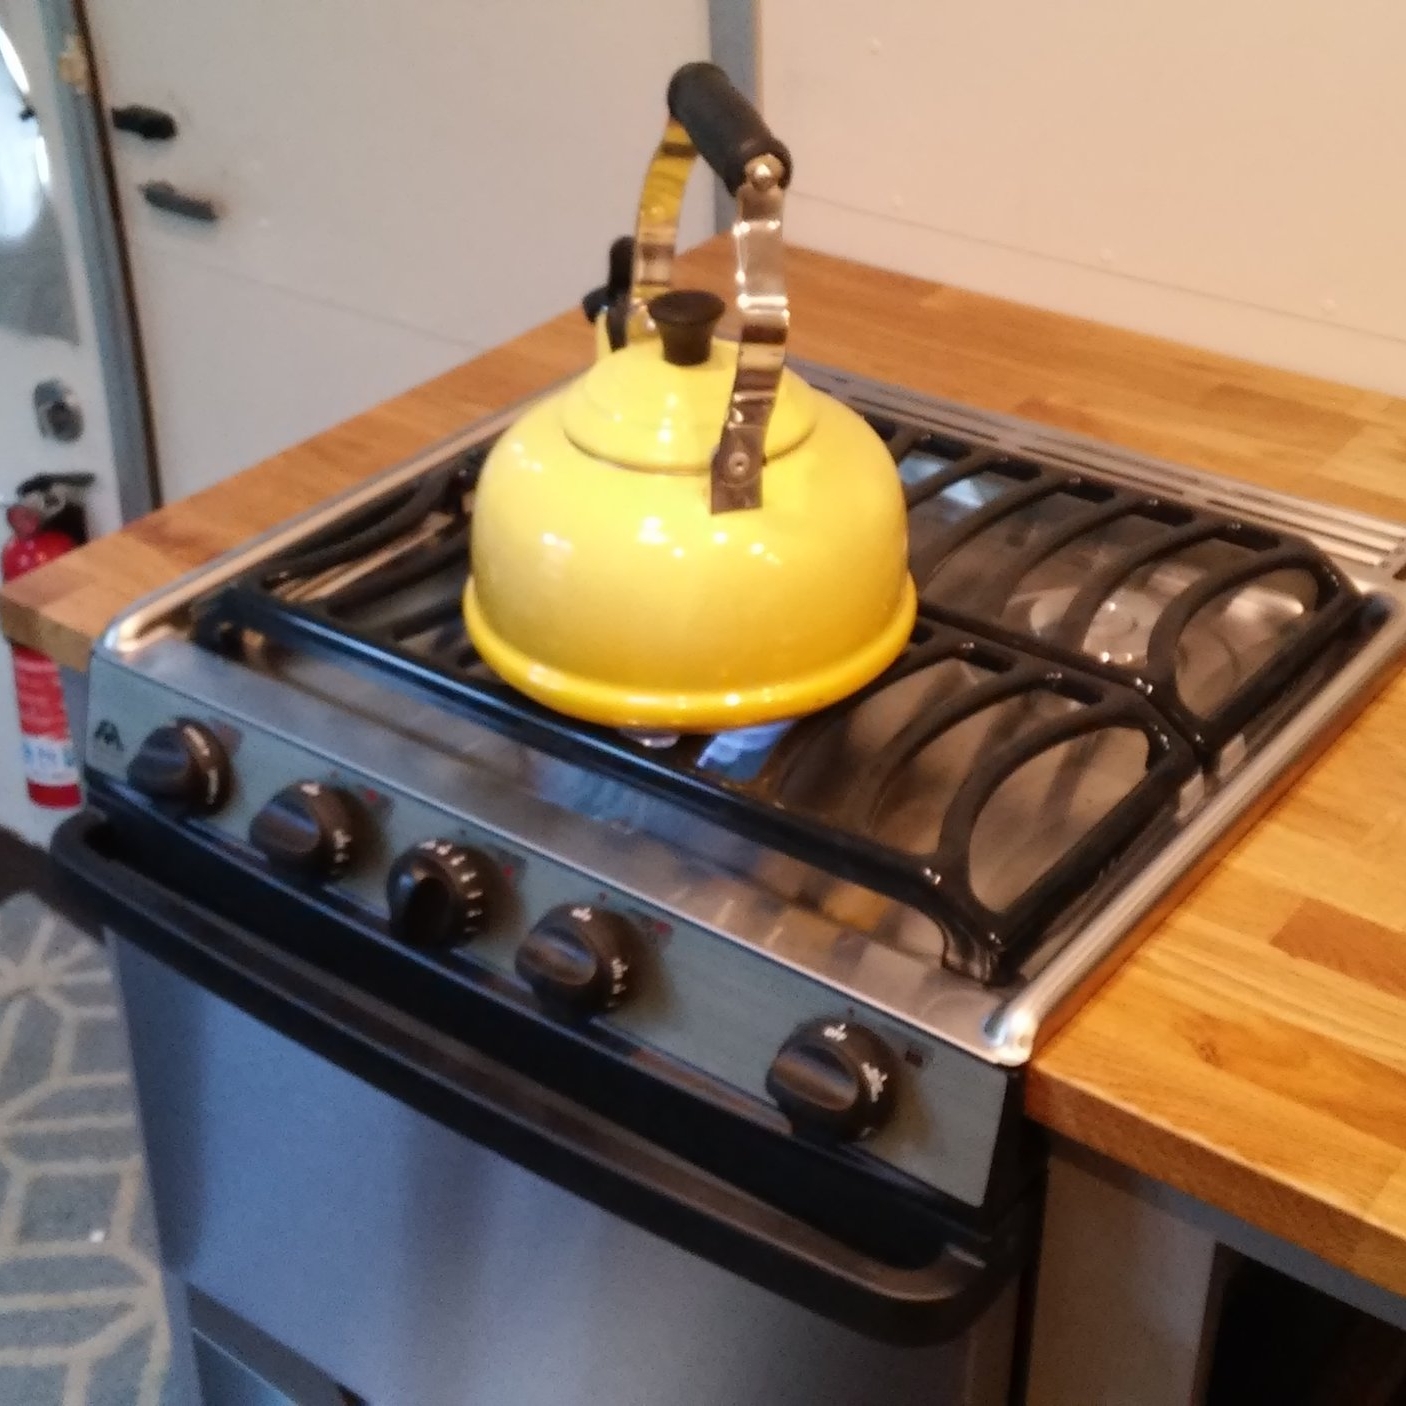 Dometic™ CU-434 RV Kitchen Range - 3-Burner Cooktop / Oven